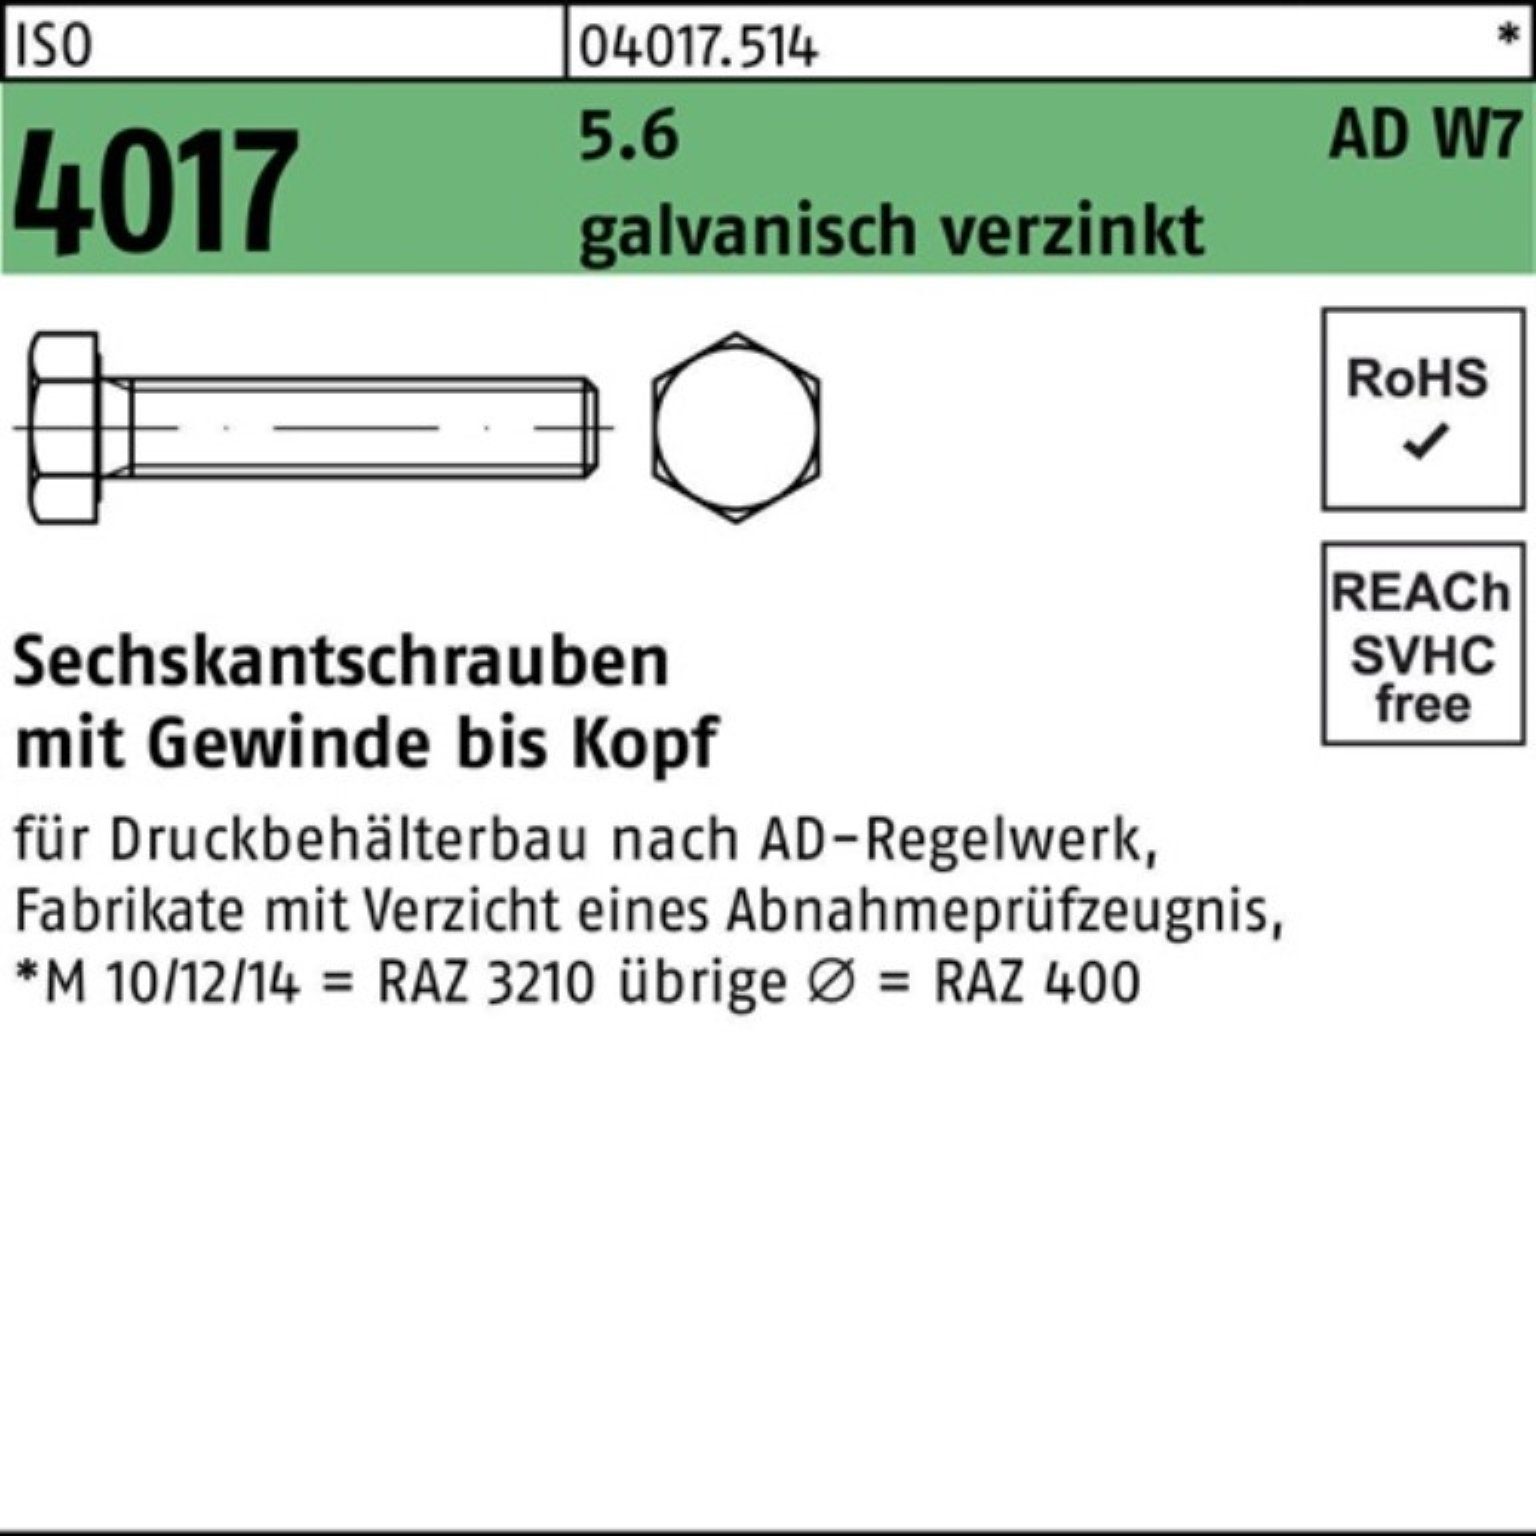 Bufab Sechskantschraube 100er Pack Sechskantschraube 5.6 M27x AD 4017 VG 65 ISO W7 galv.verz